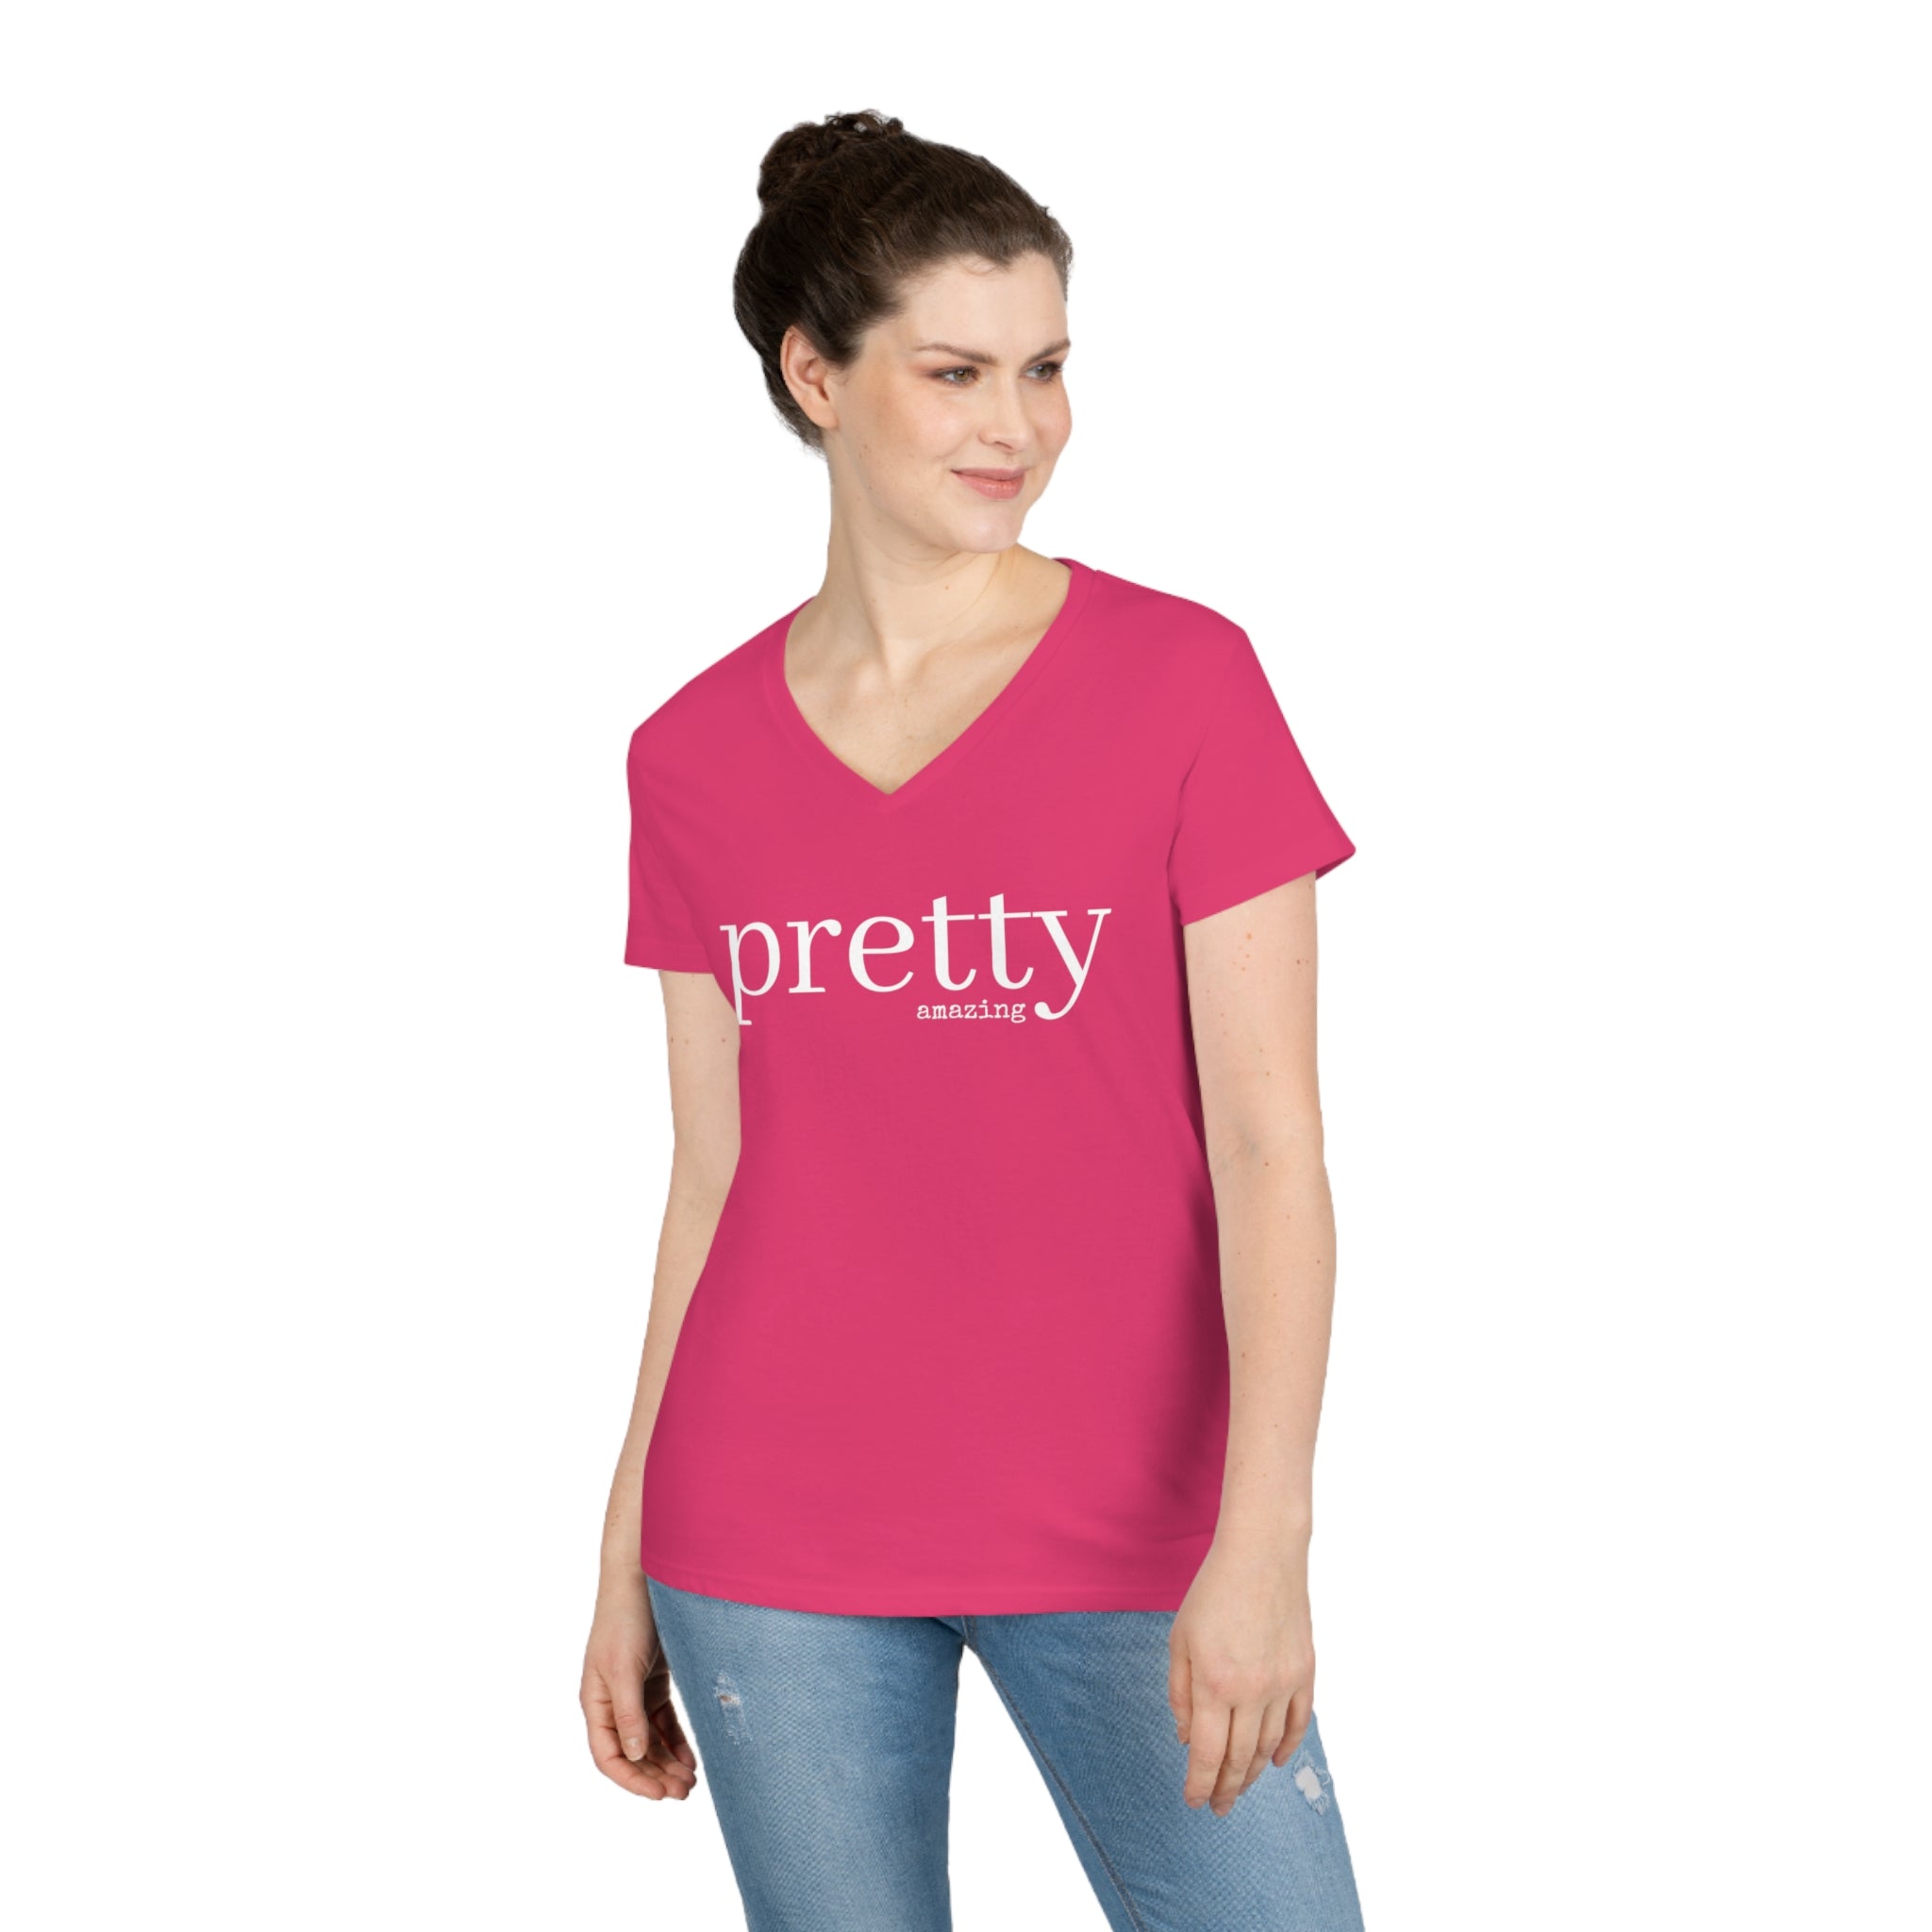  PRETTY amazing Women's V Neck T-shirt, Cute Graphic Tee V-neck